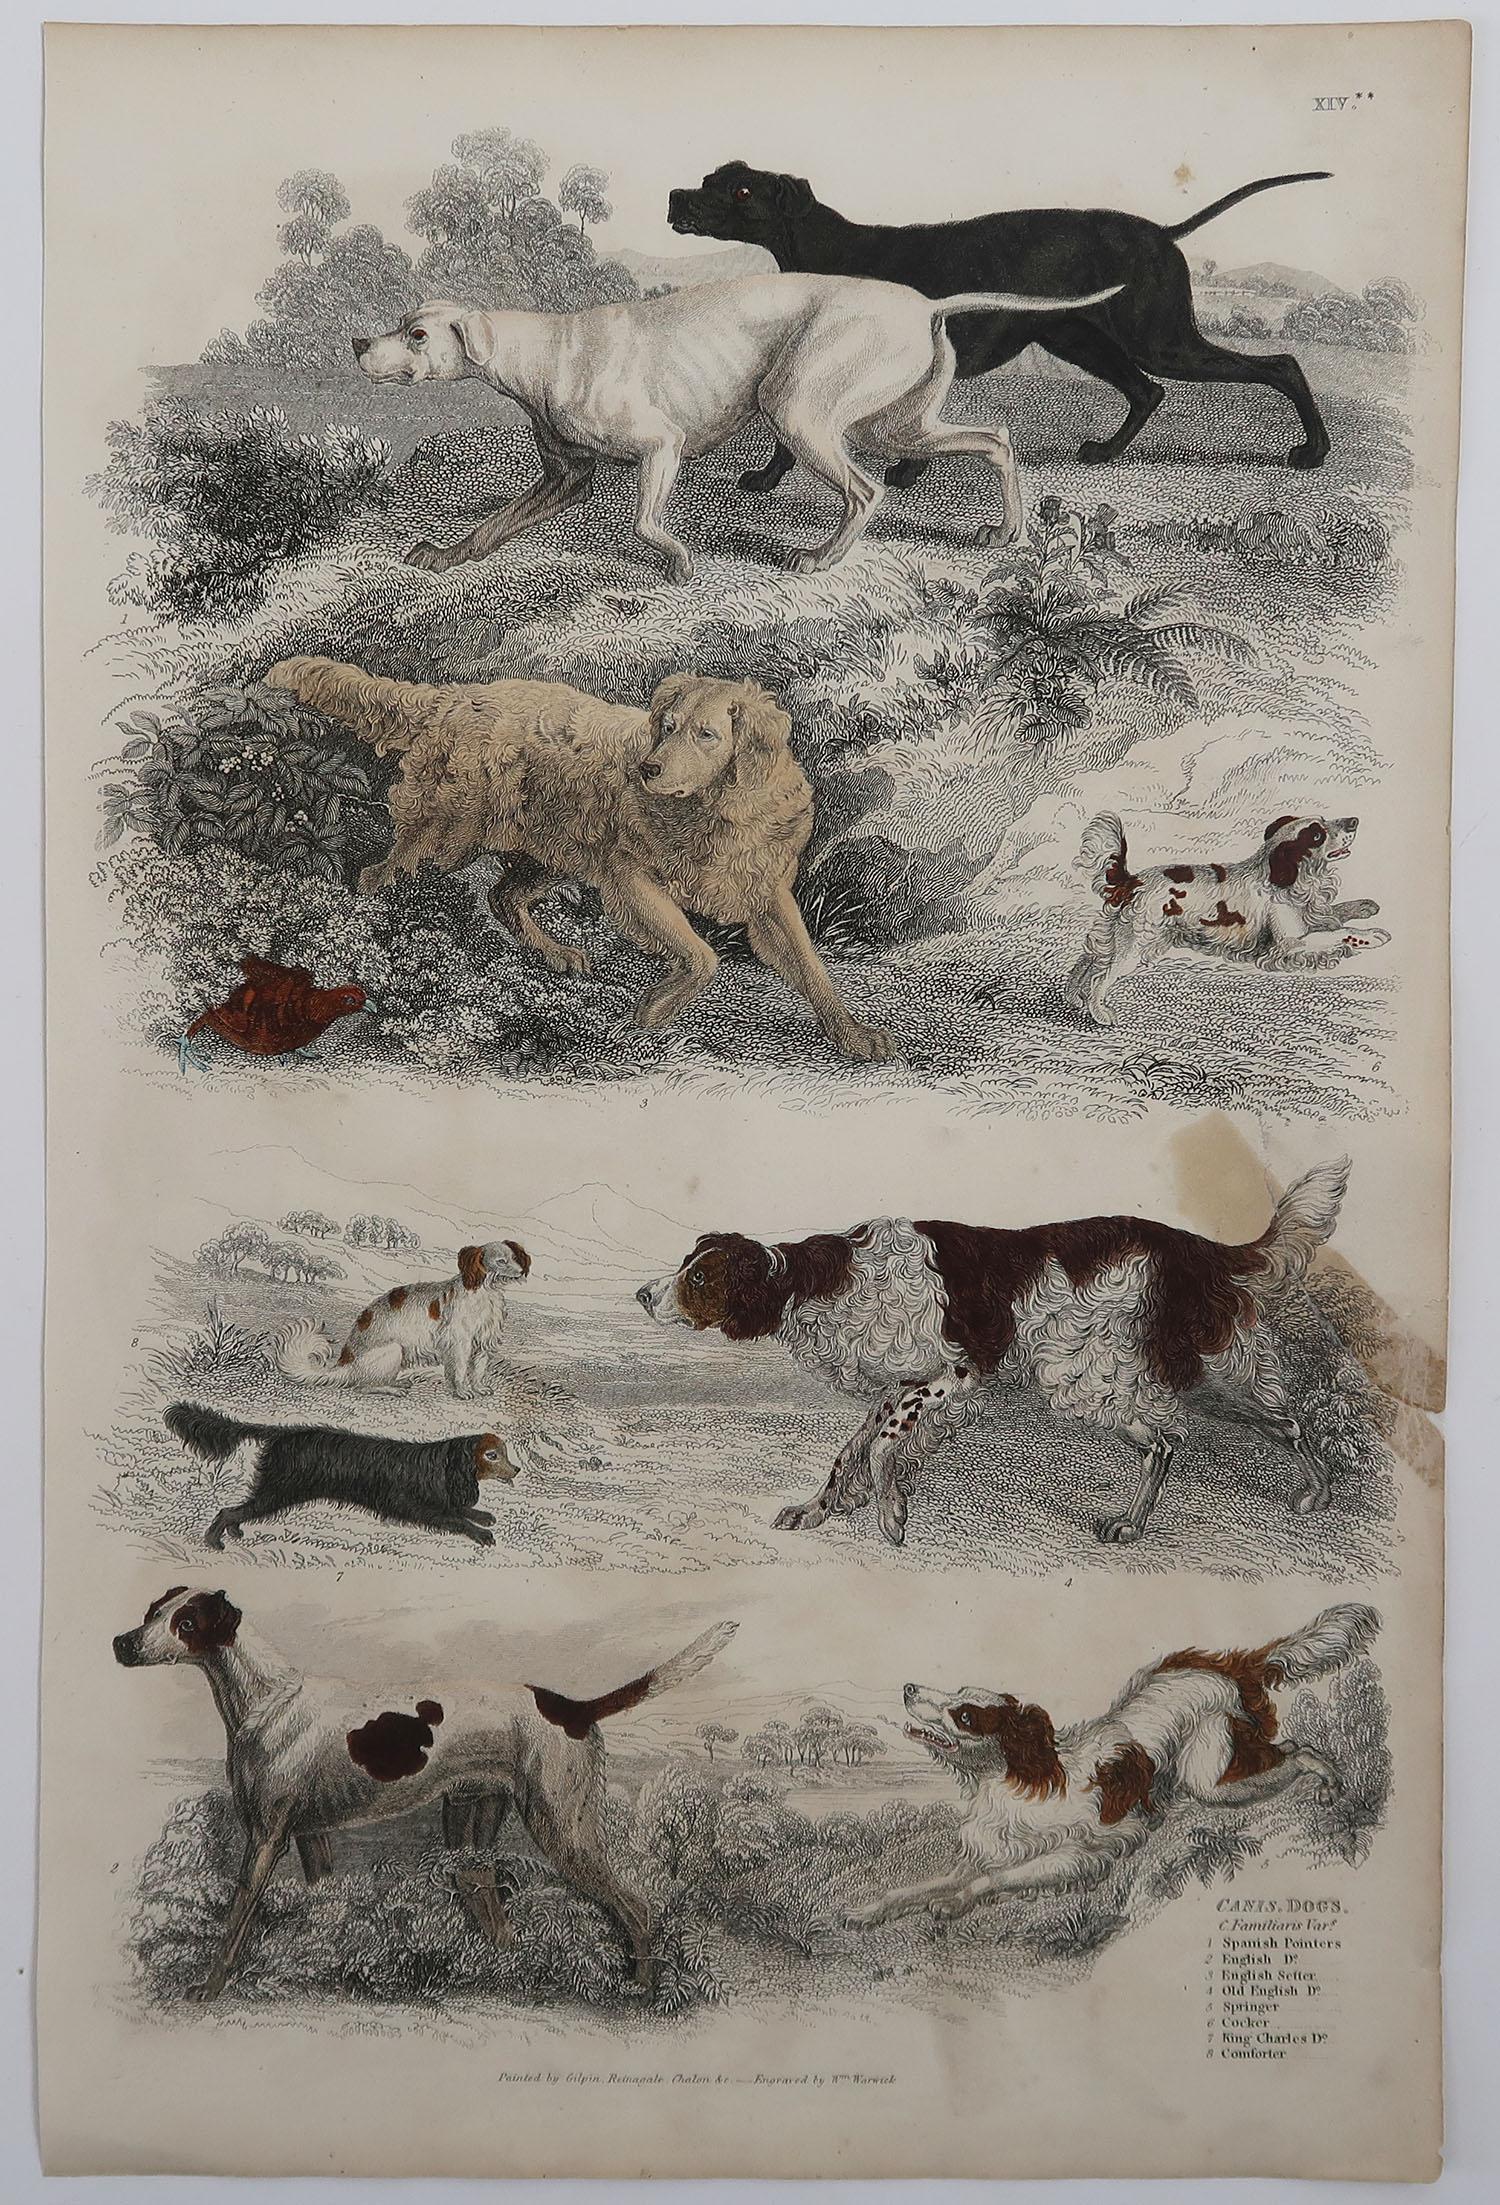 Folk Art Large Original Antique Natural History Print, Dogs, circa 1835